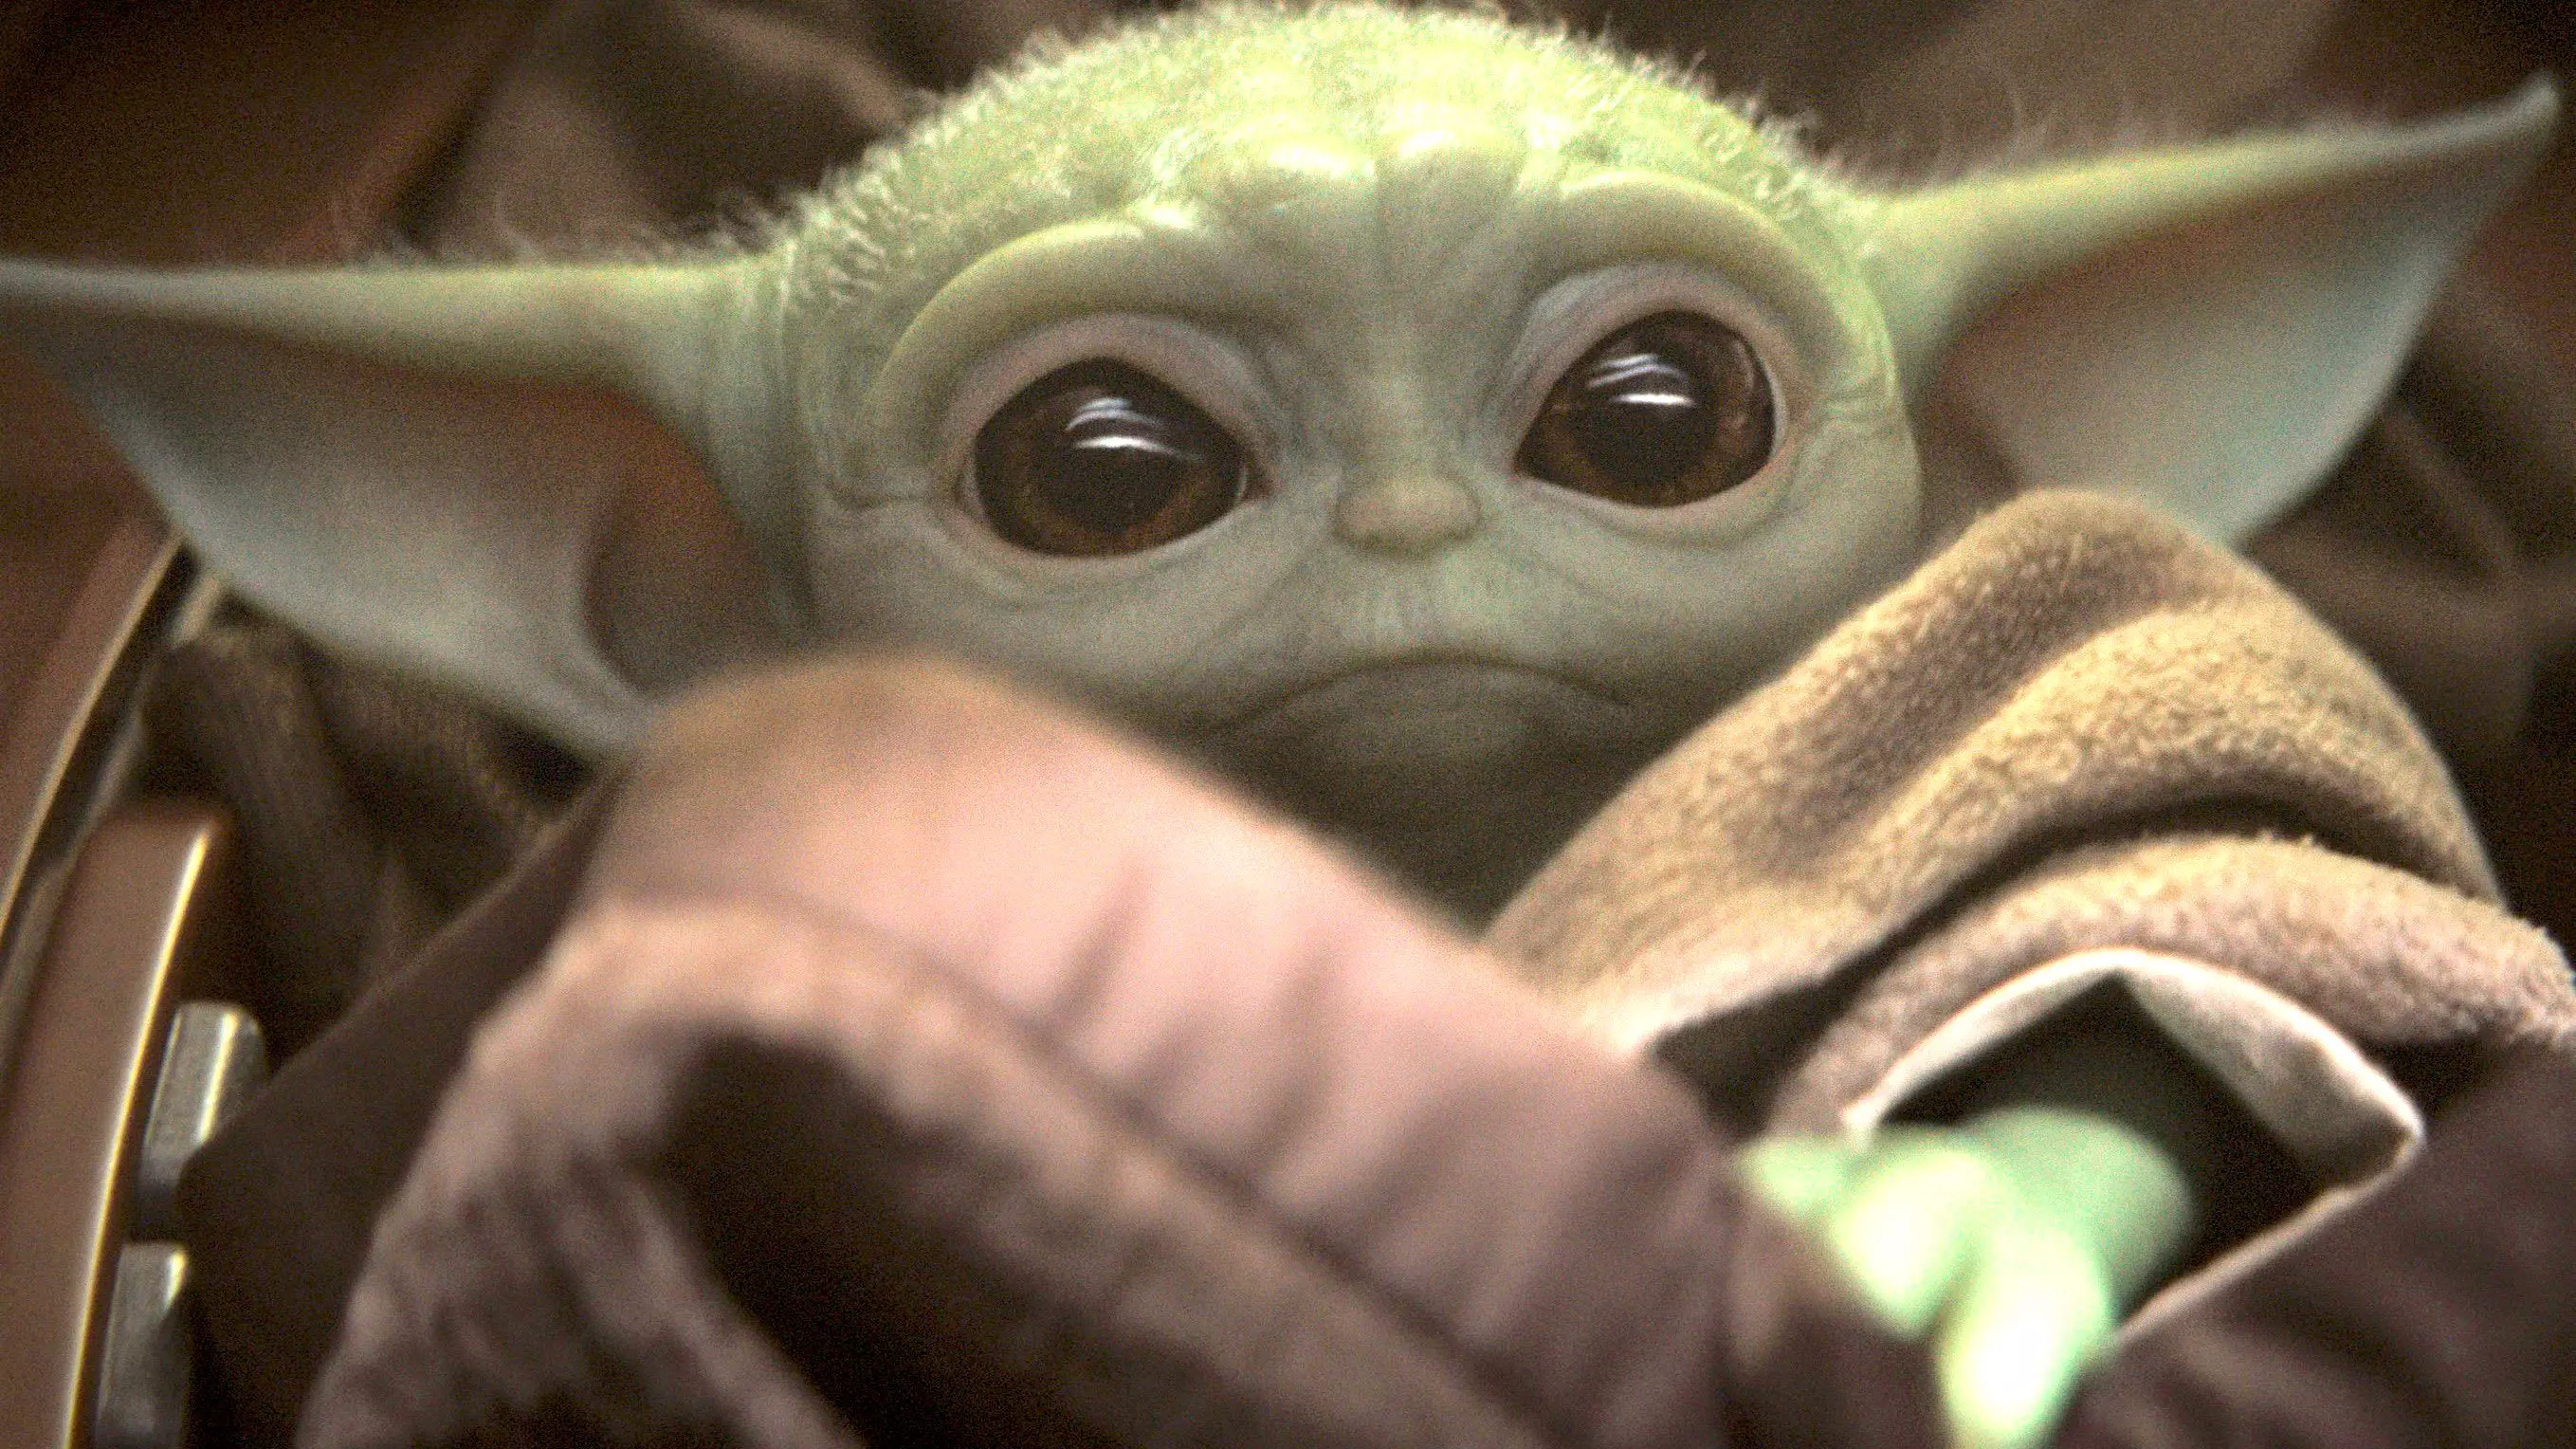 Baby Yoda here, being cute.